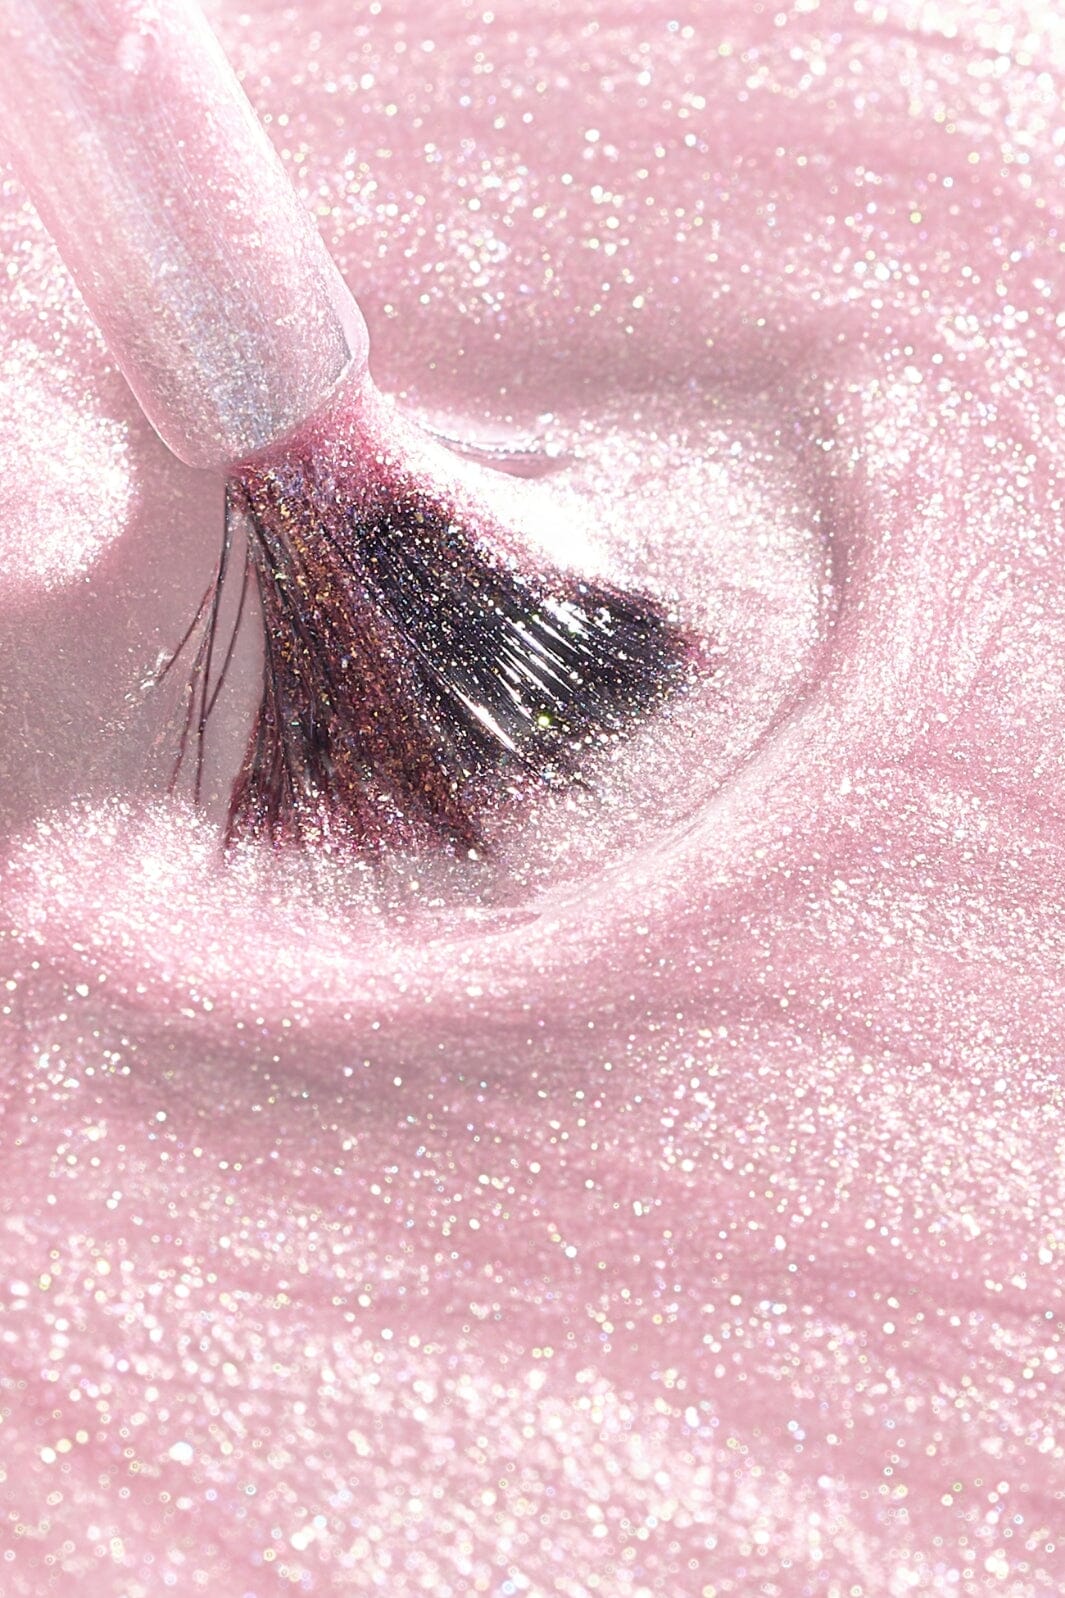 Le Mini Macaron - Gel Polish - Pink Paradise Neglelak 